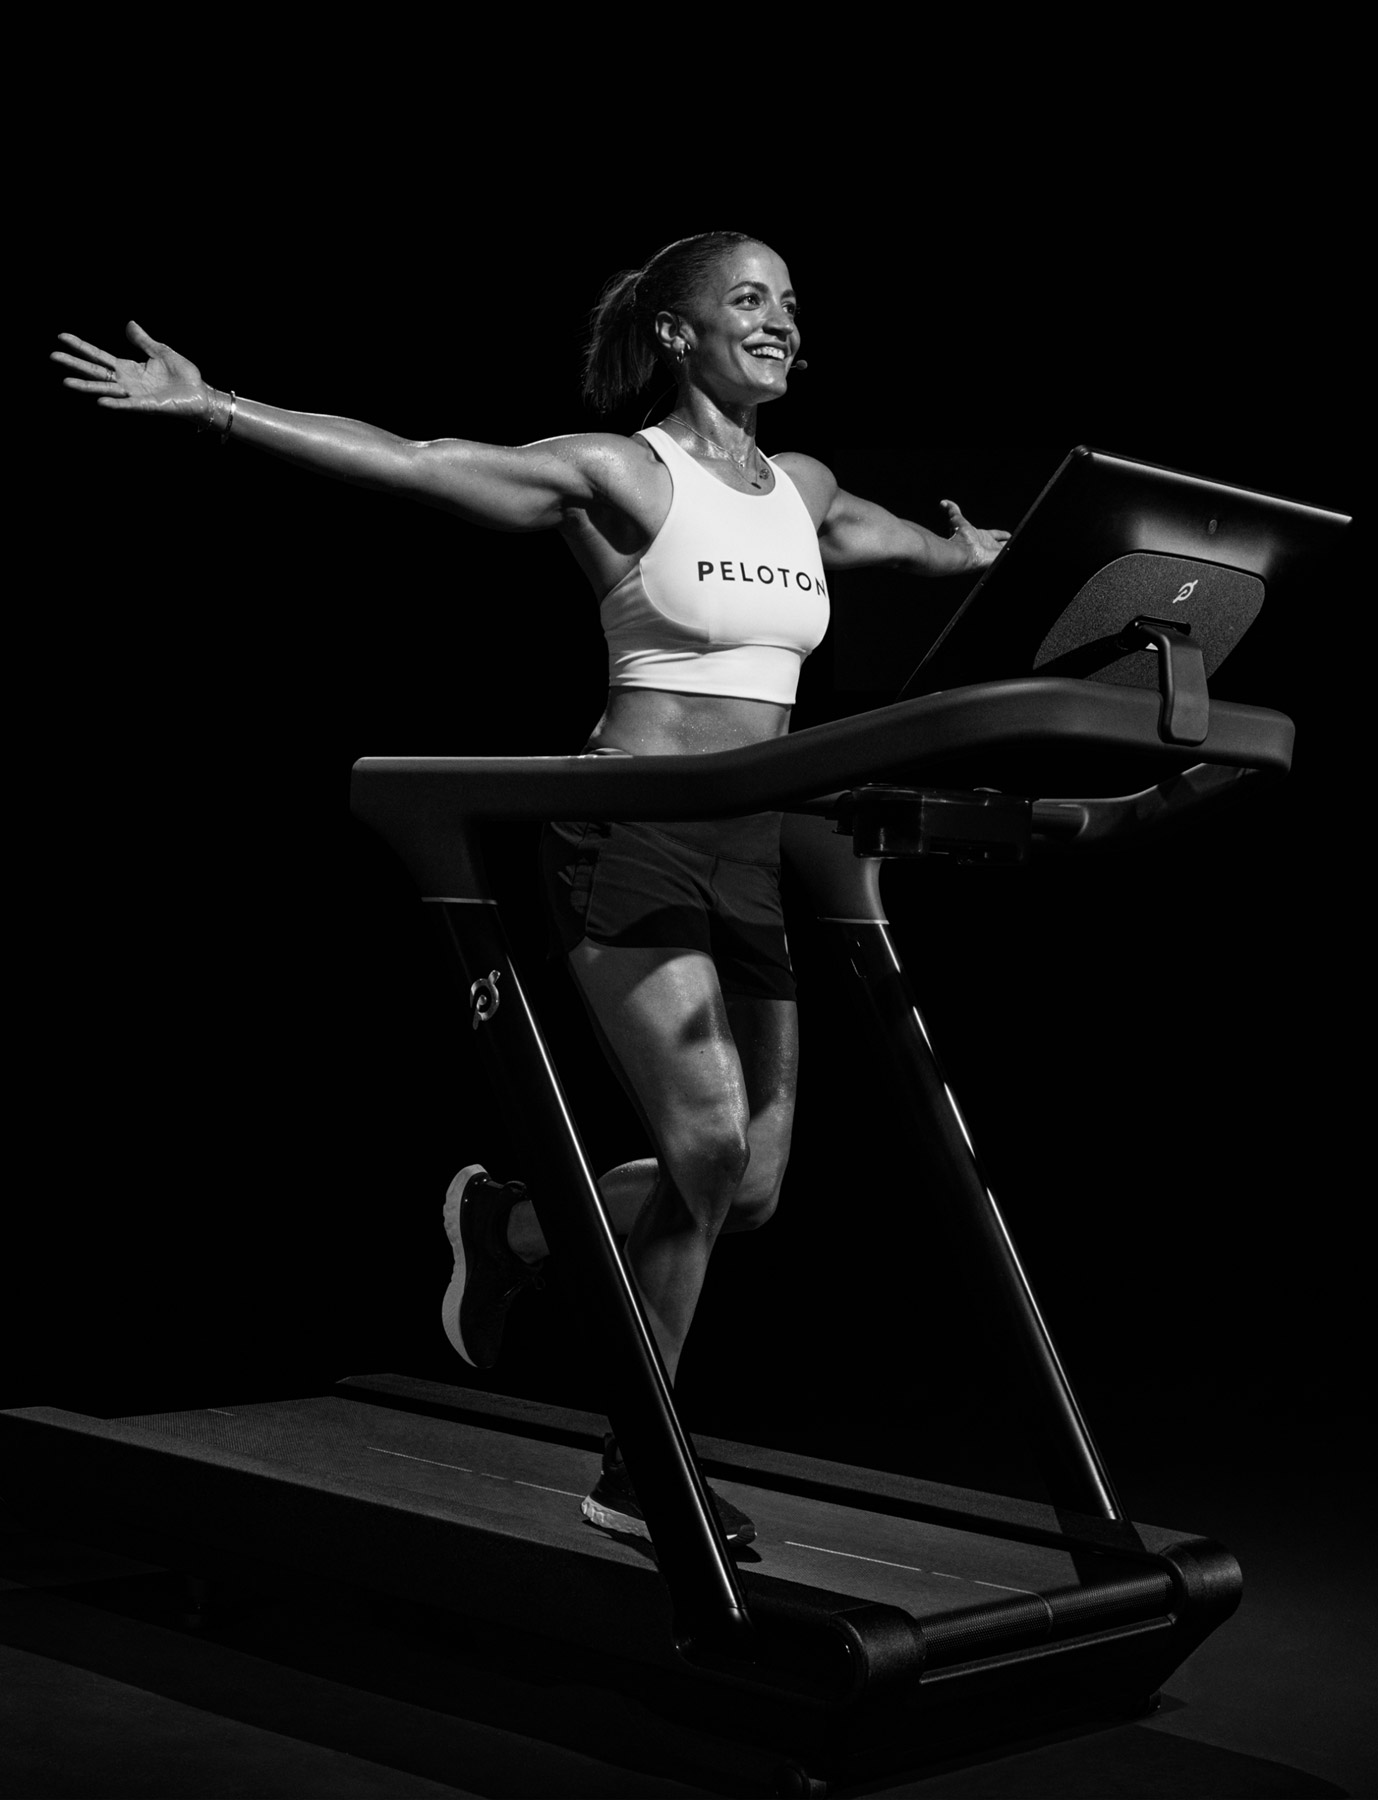 glorious peloton joslyn thompson rule on treadmill black and white